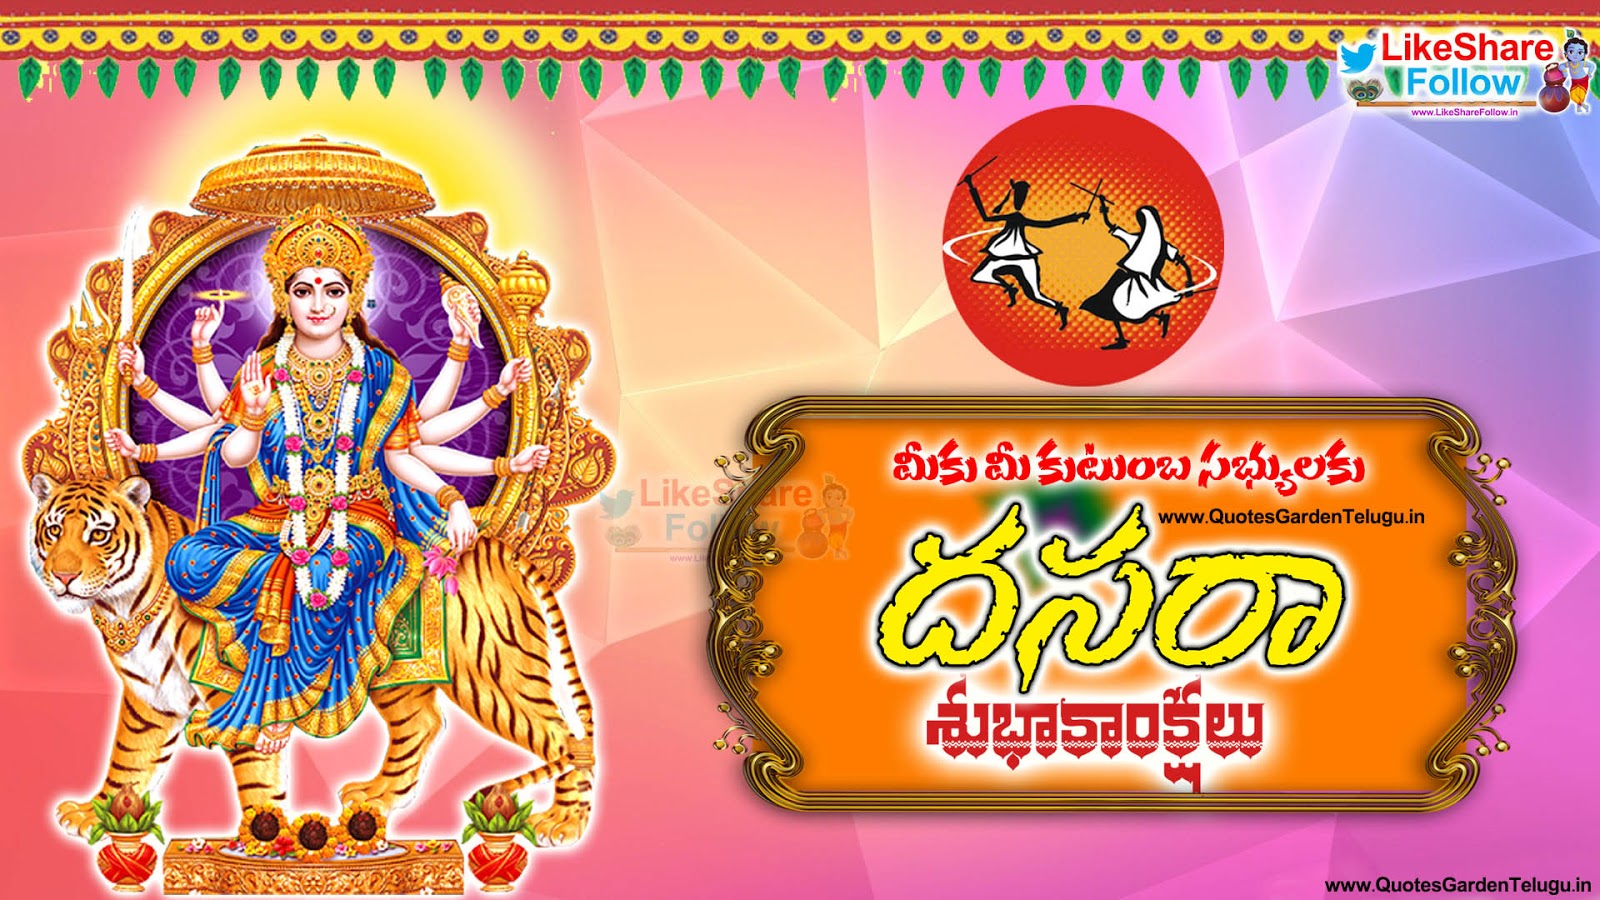 Vijayadashami telugu greetings wishes images | Like Share Follow